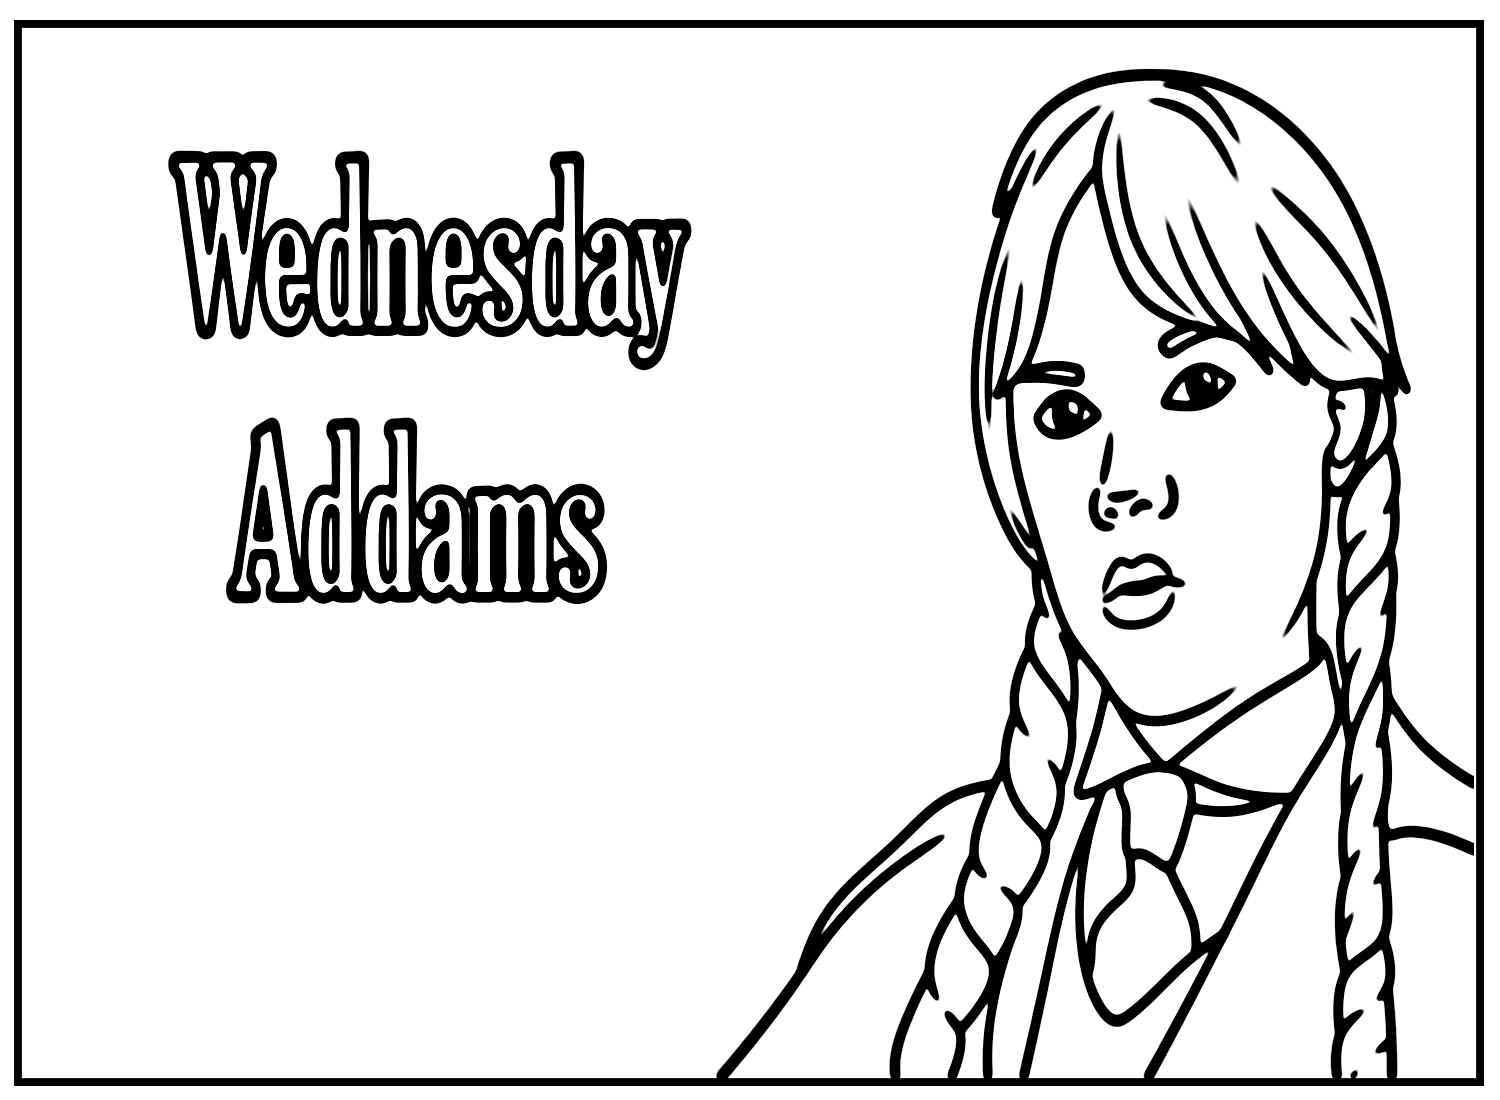 Mercoledì Addams da mercoledì